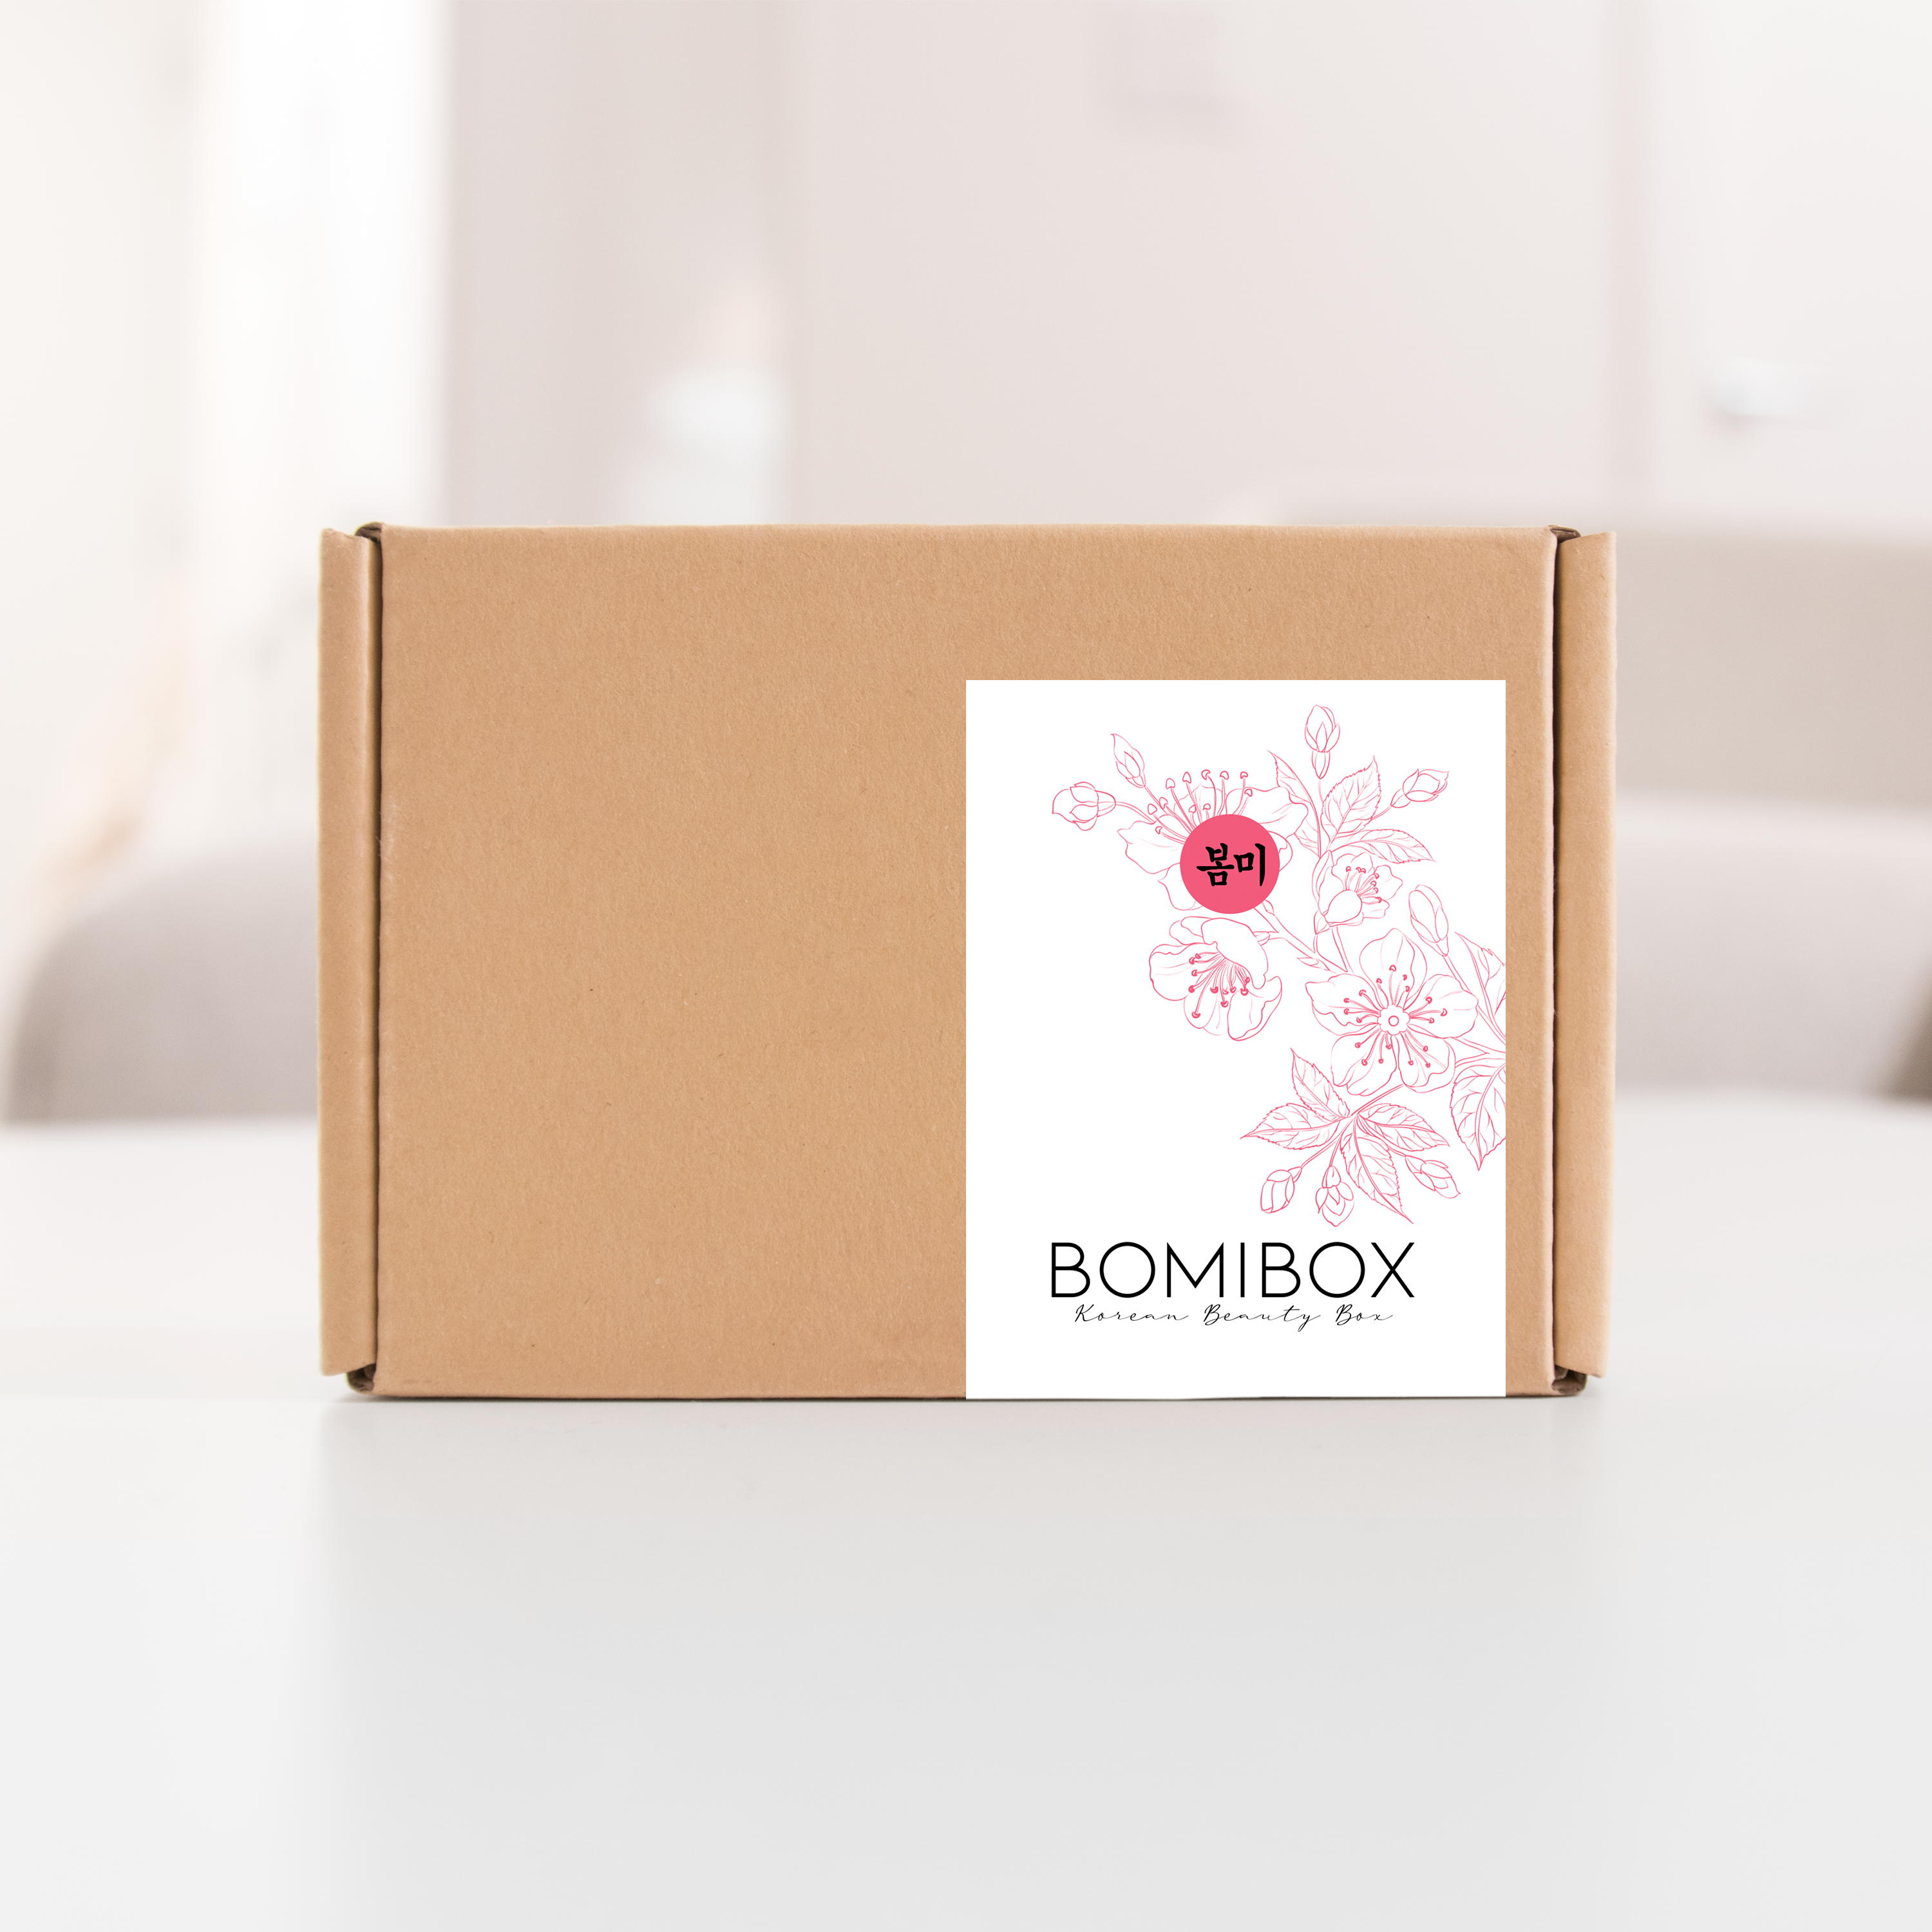 Past Boxes-Bomibox Spring #2 - Korean Beauty Box Monthly Korean Skincare Subscription